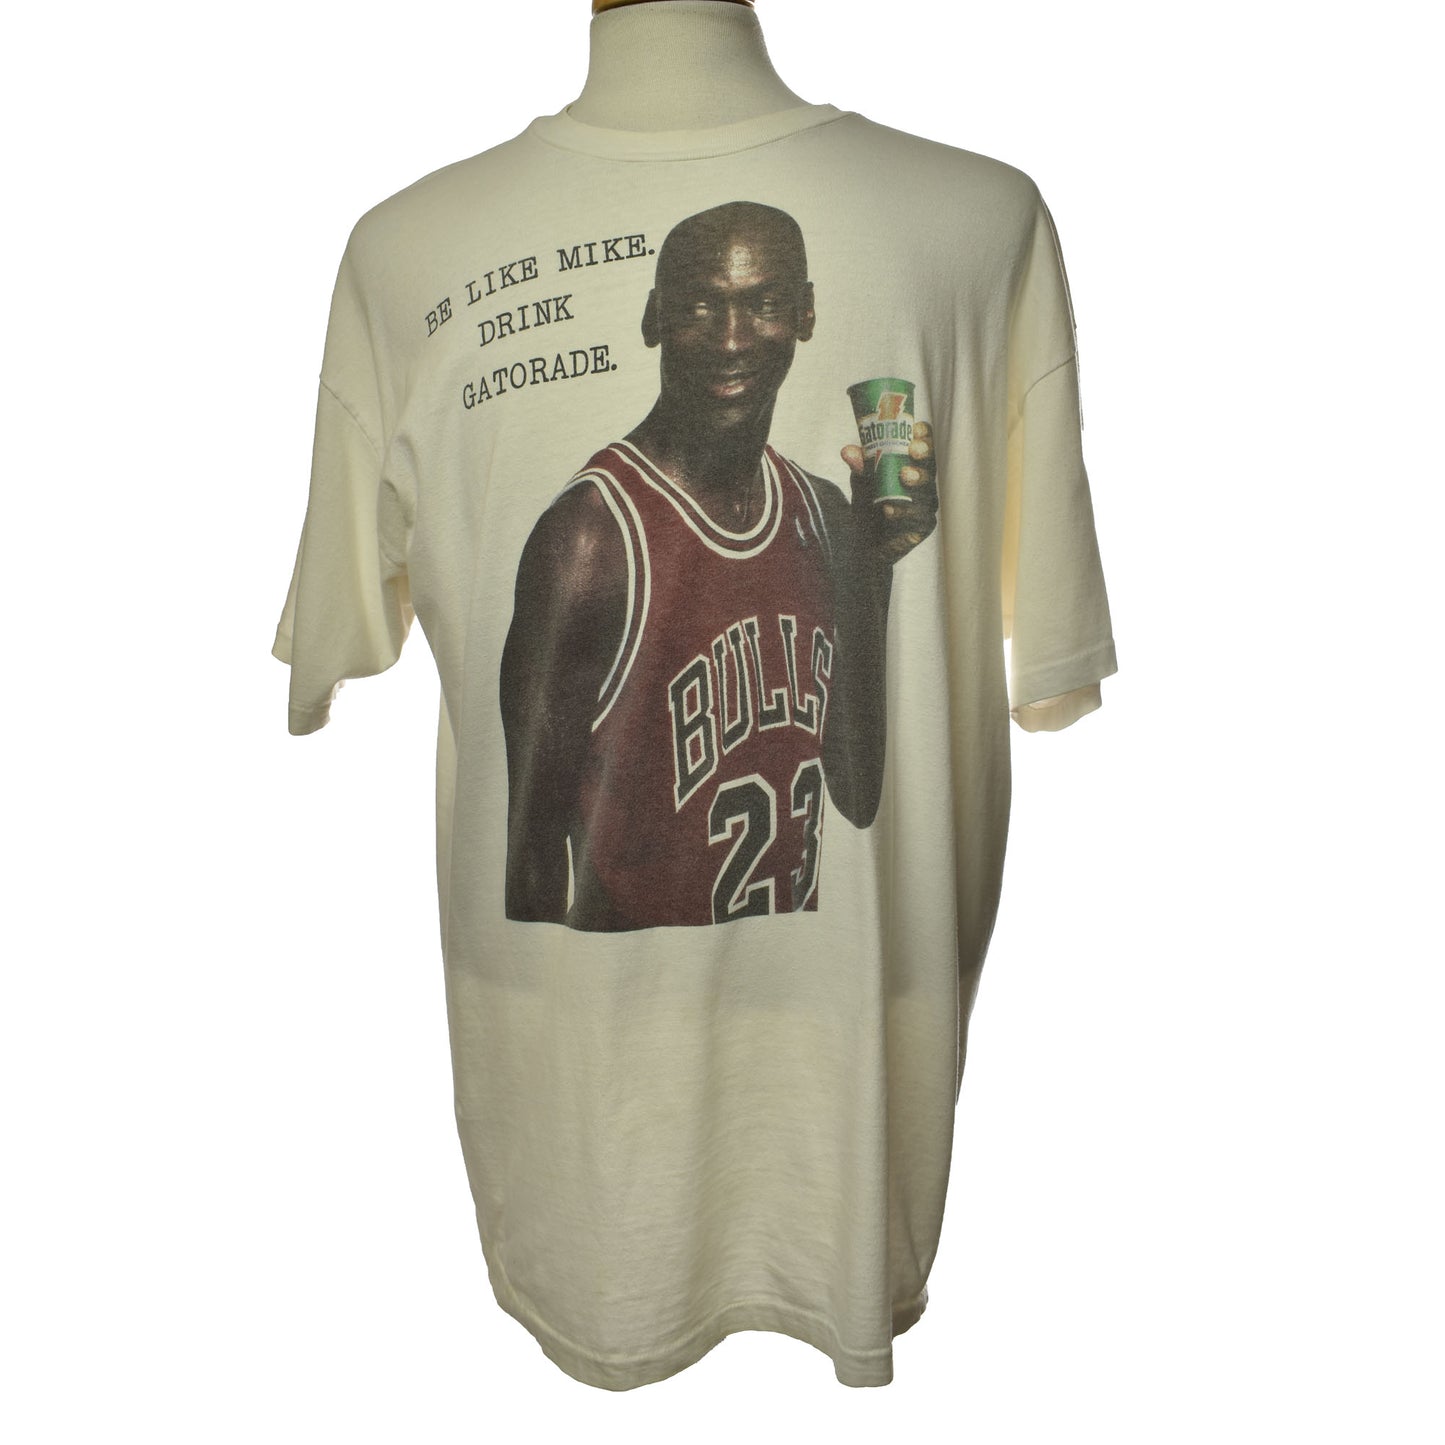 Vintage RARE 90s Michael Jordan X Gatorade "Be Like Mike" T-Shirt - Single Stitch - Made In USA